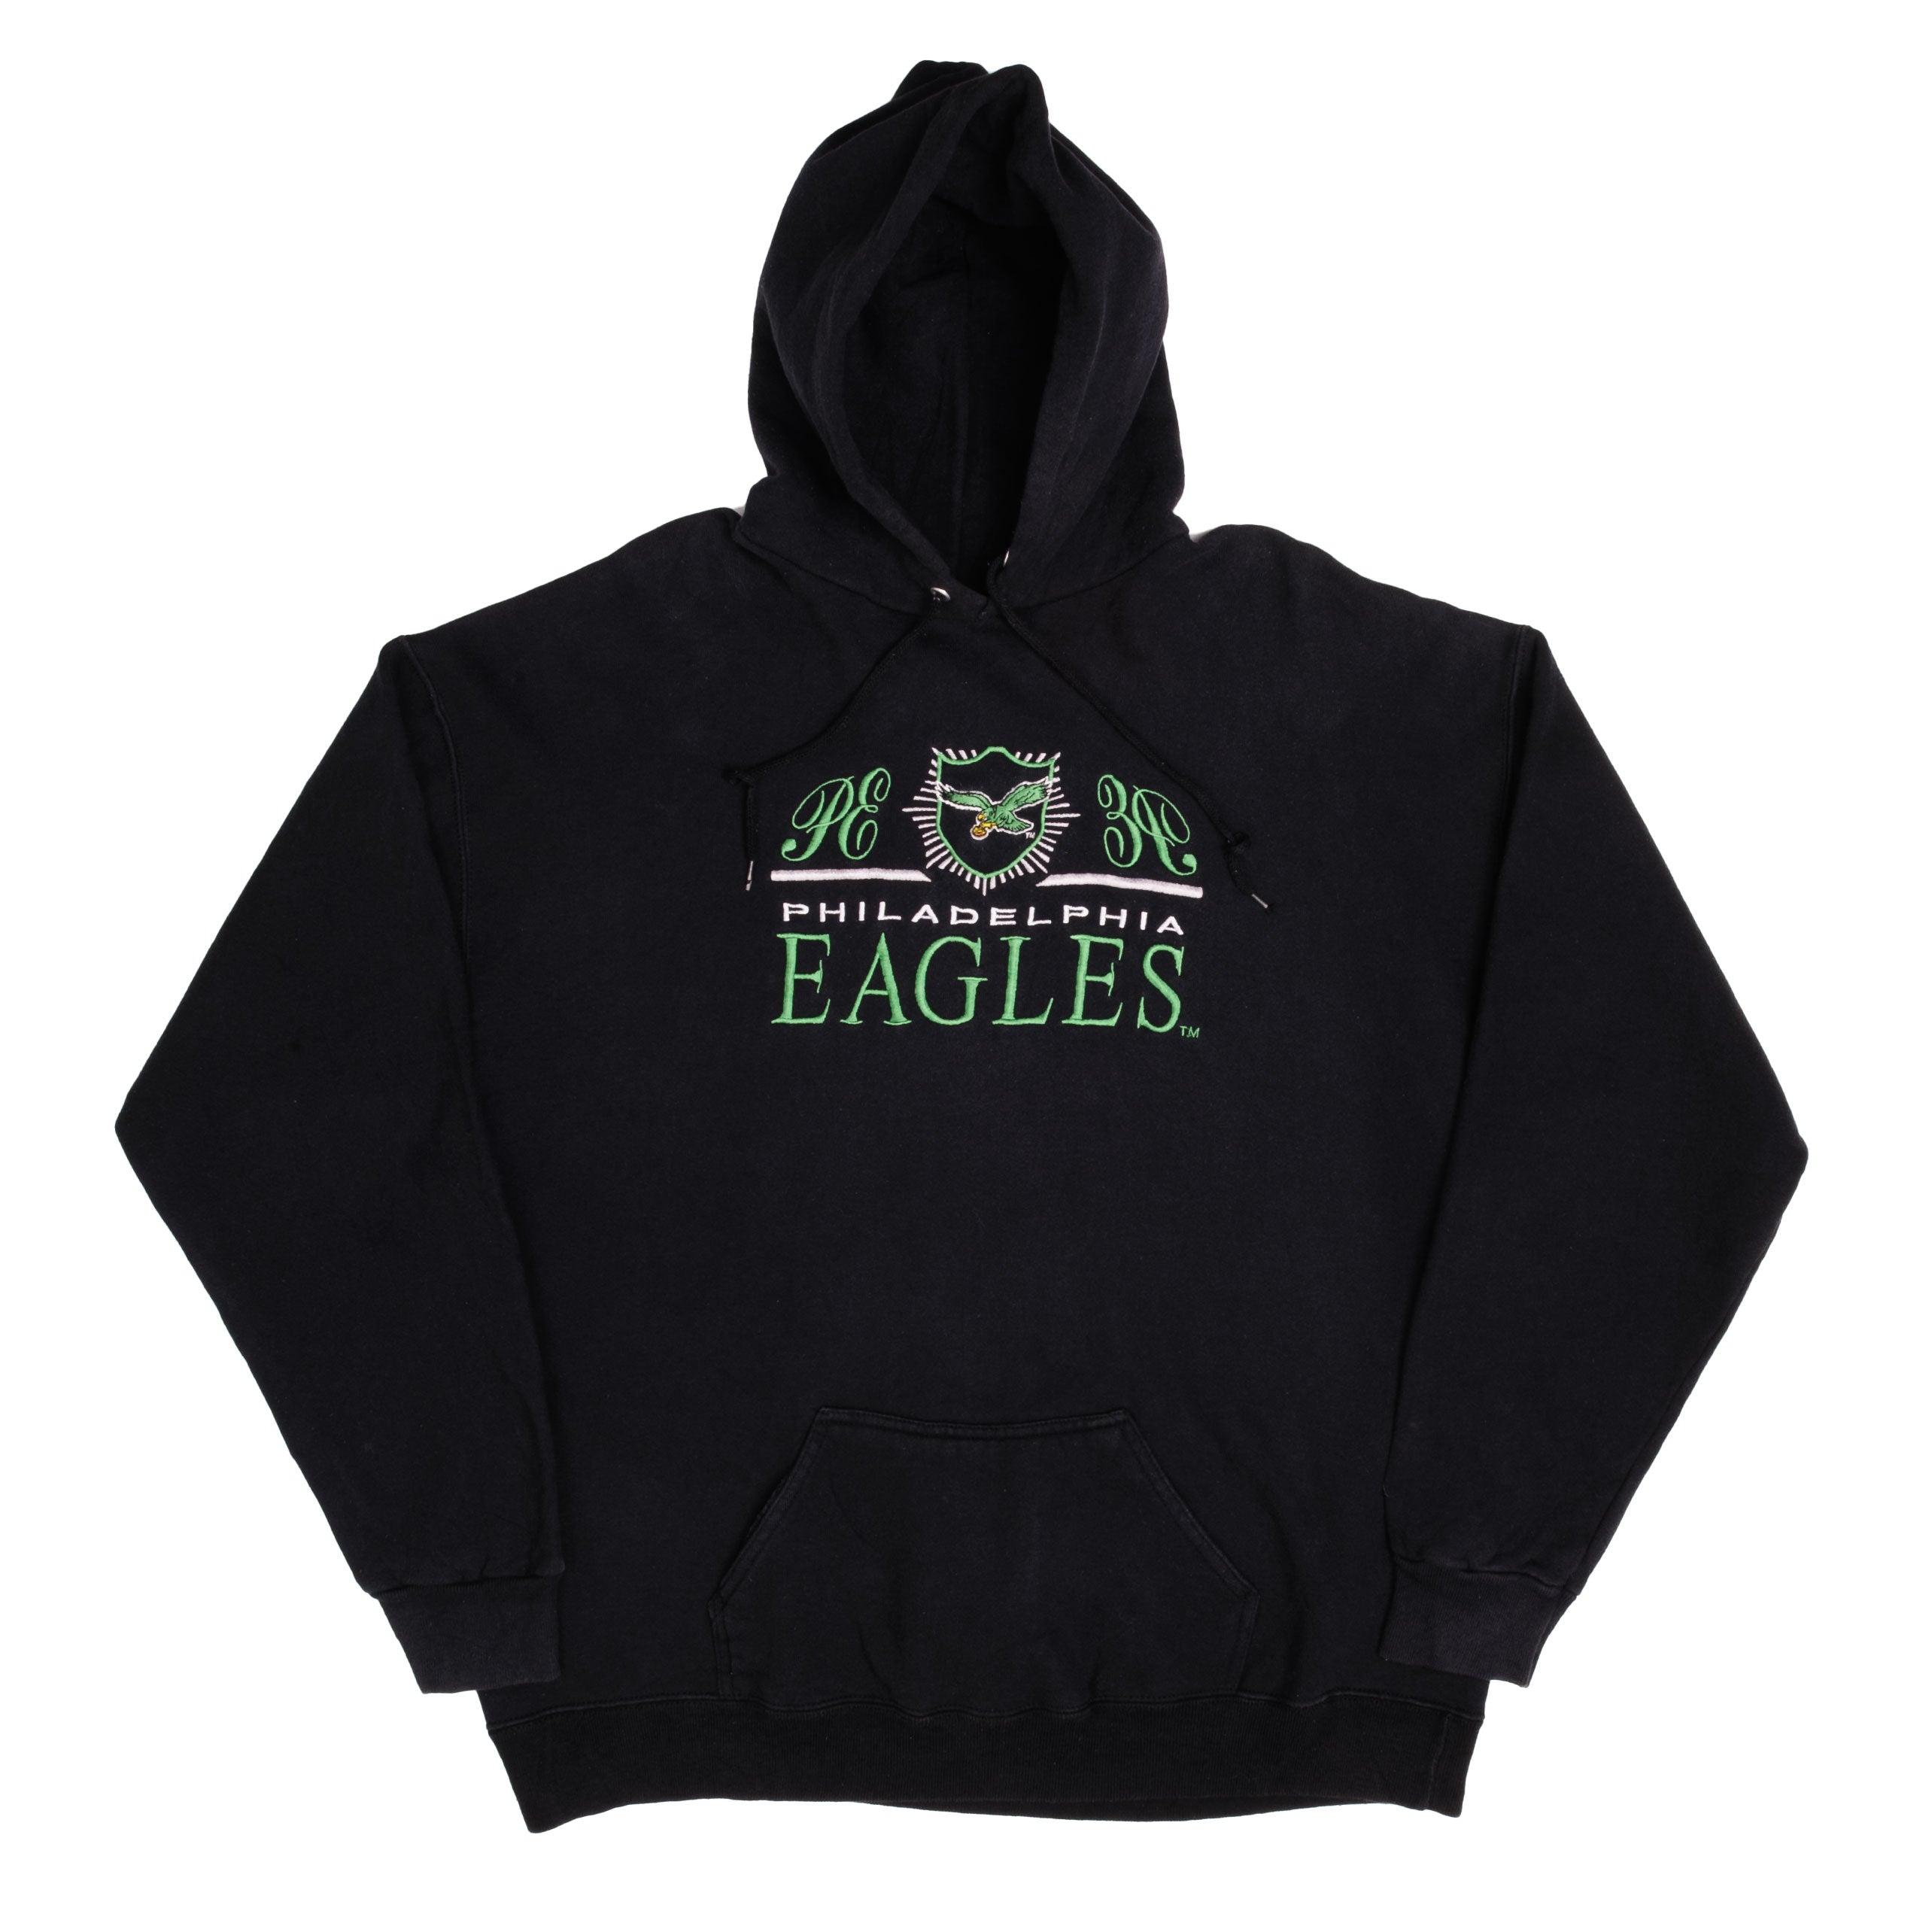 Vintage NFL Philadelphia Eagles Hoodie Sweatshirt Size XL Made in USA